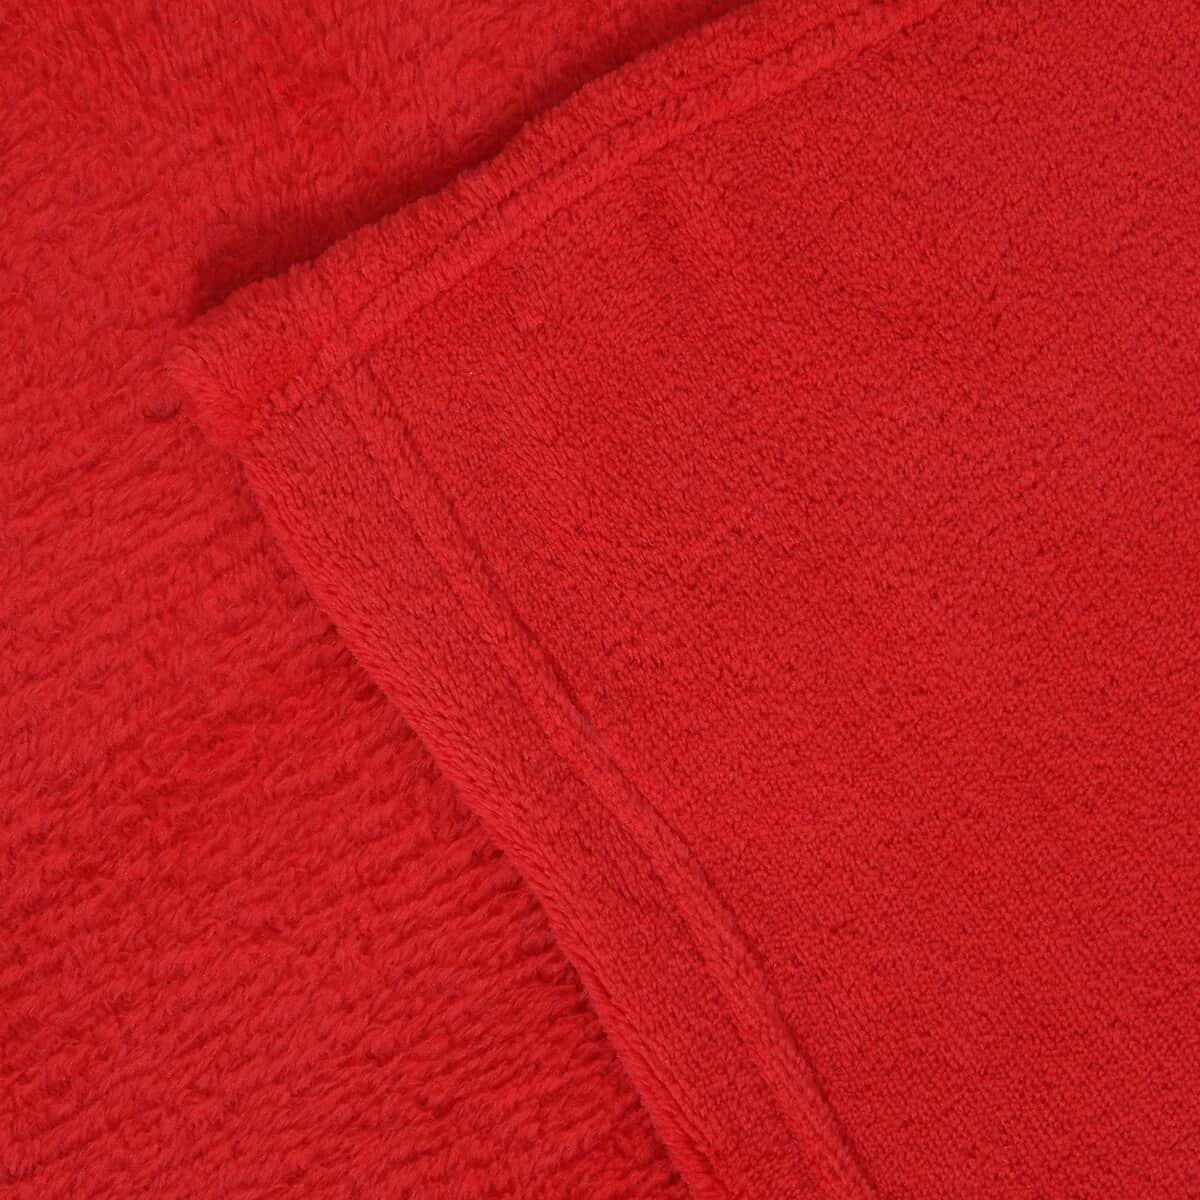 Homesmart Red Solid Super Soft and Warm Coral Fleece Blanket image number 1